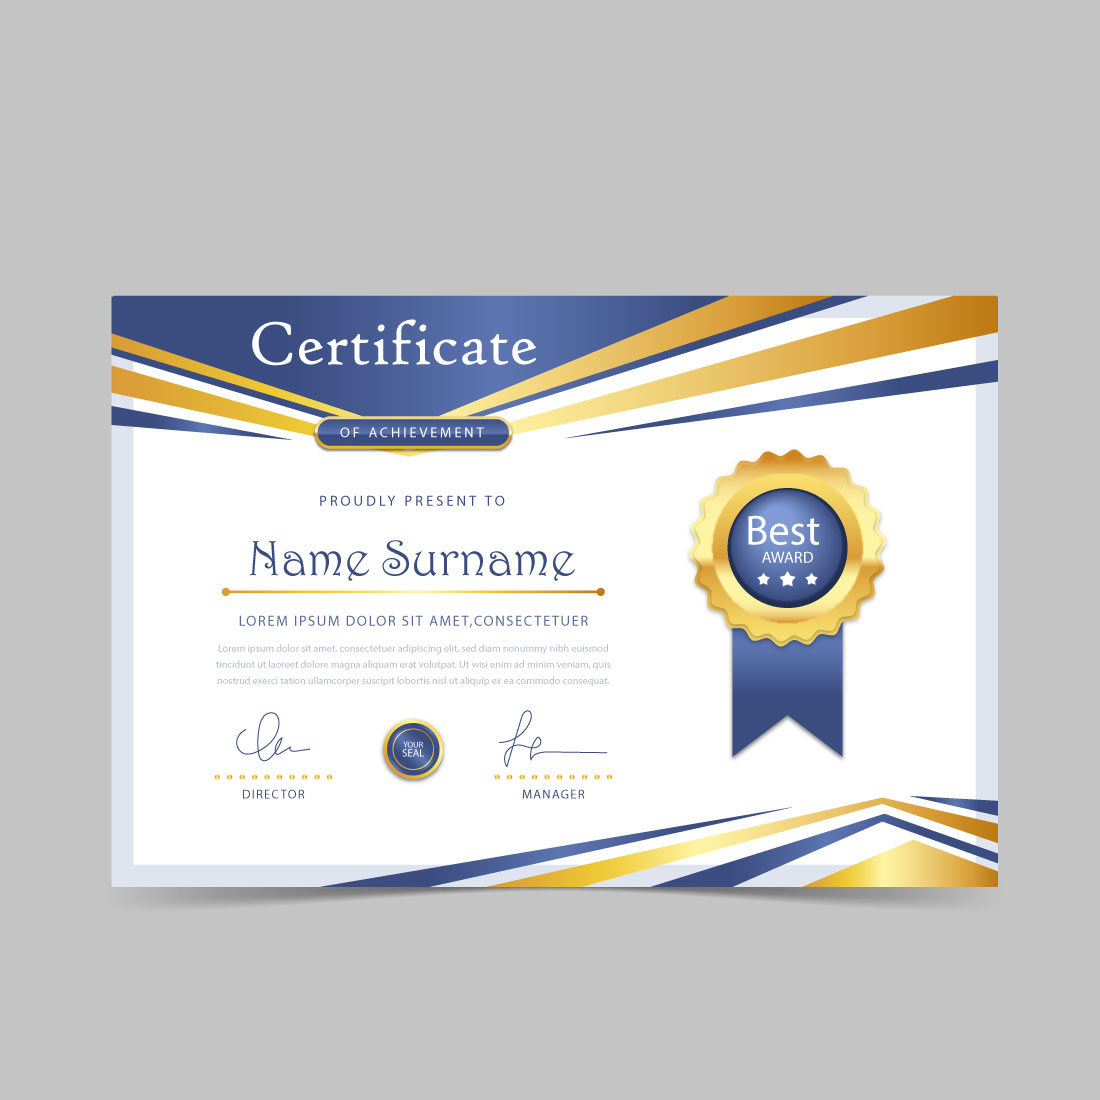 Ranking Certificate Design cover image.